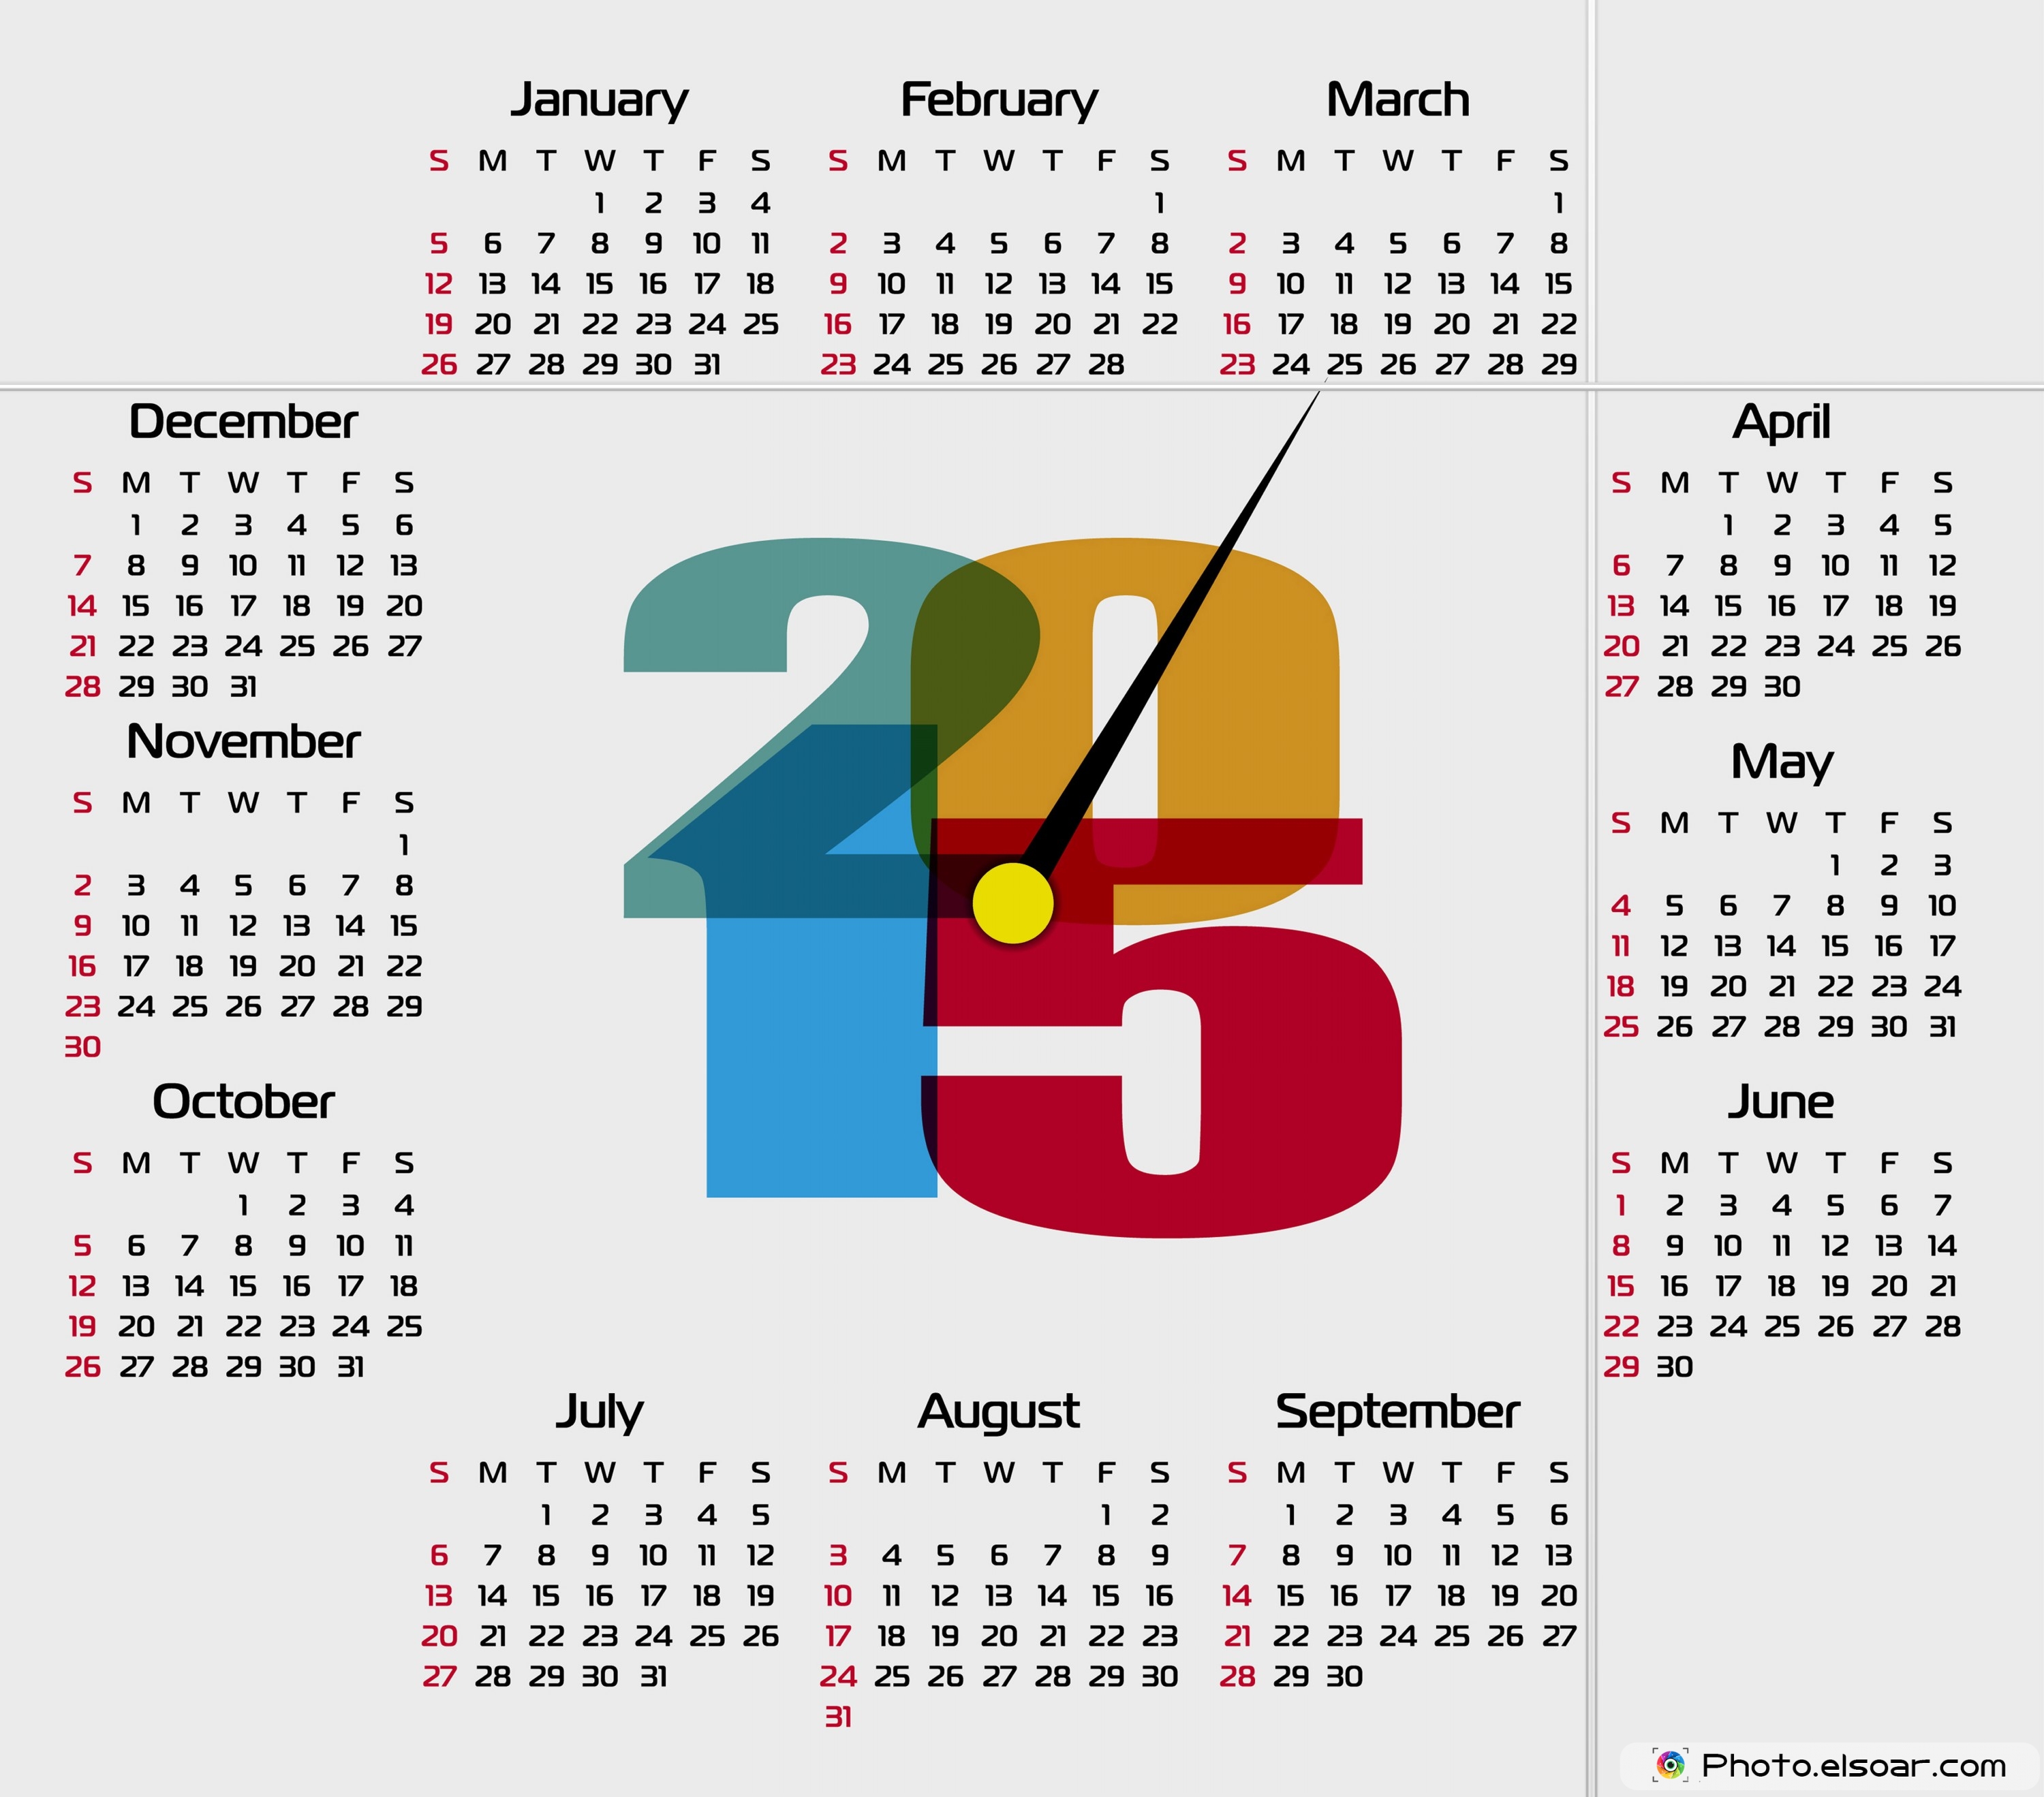 2015 calendar photoshop template free download